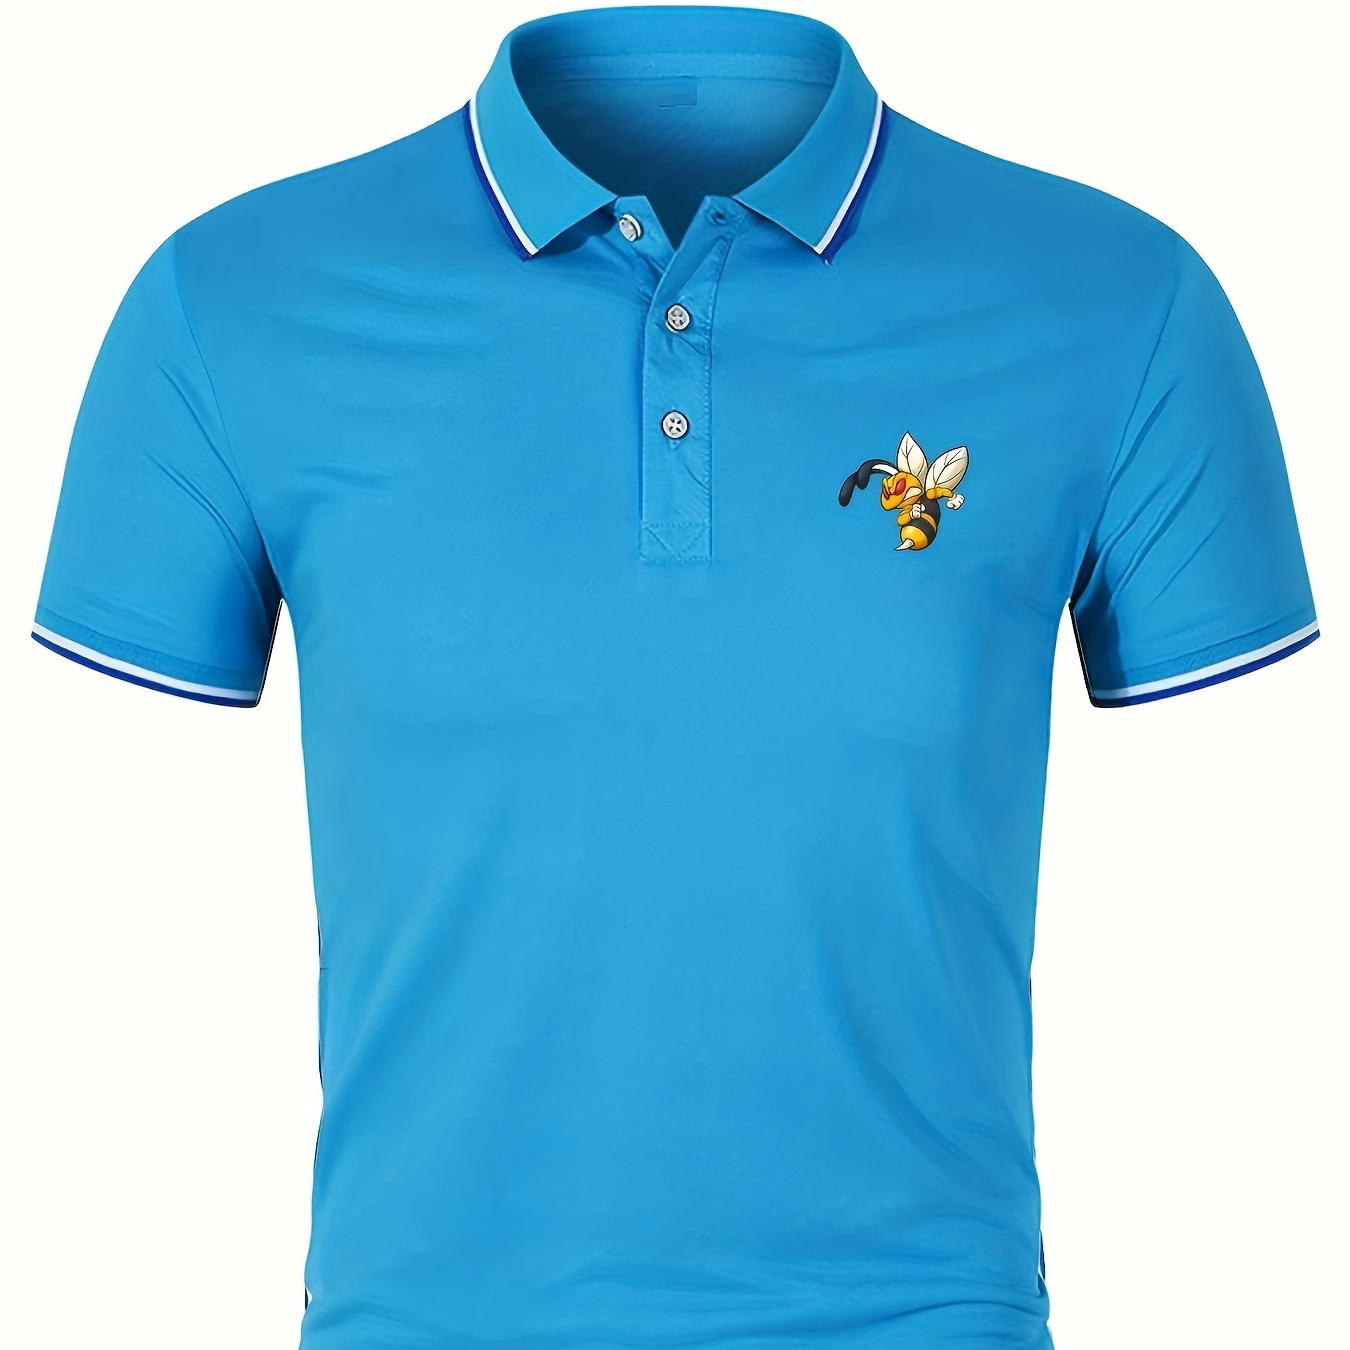 

Men's Golf Shirt, Bee Print Short Sleeve Breathable Tennis Shirt, Business Casual, Moisture Wicking